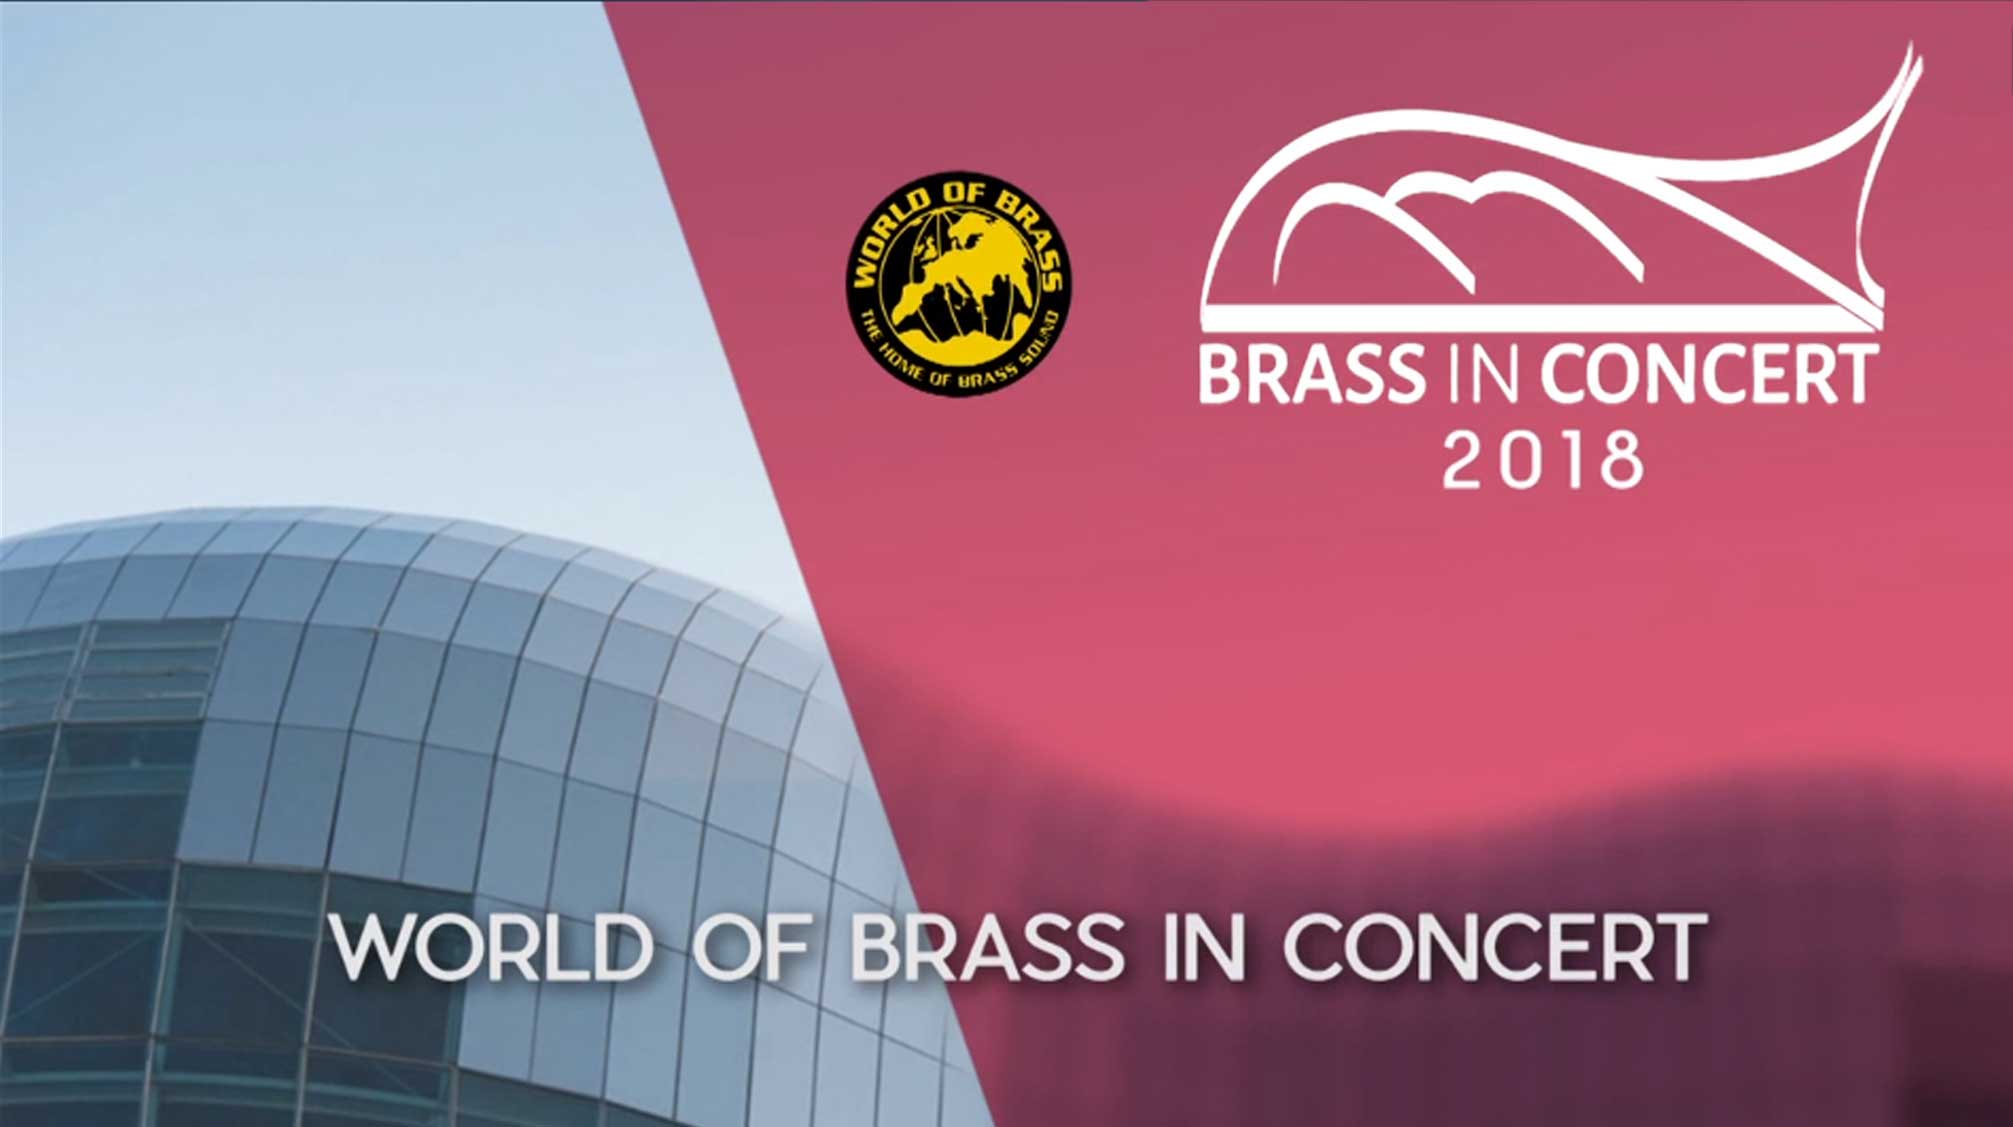 World of Brass in Concert 2018